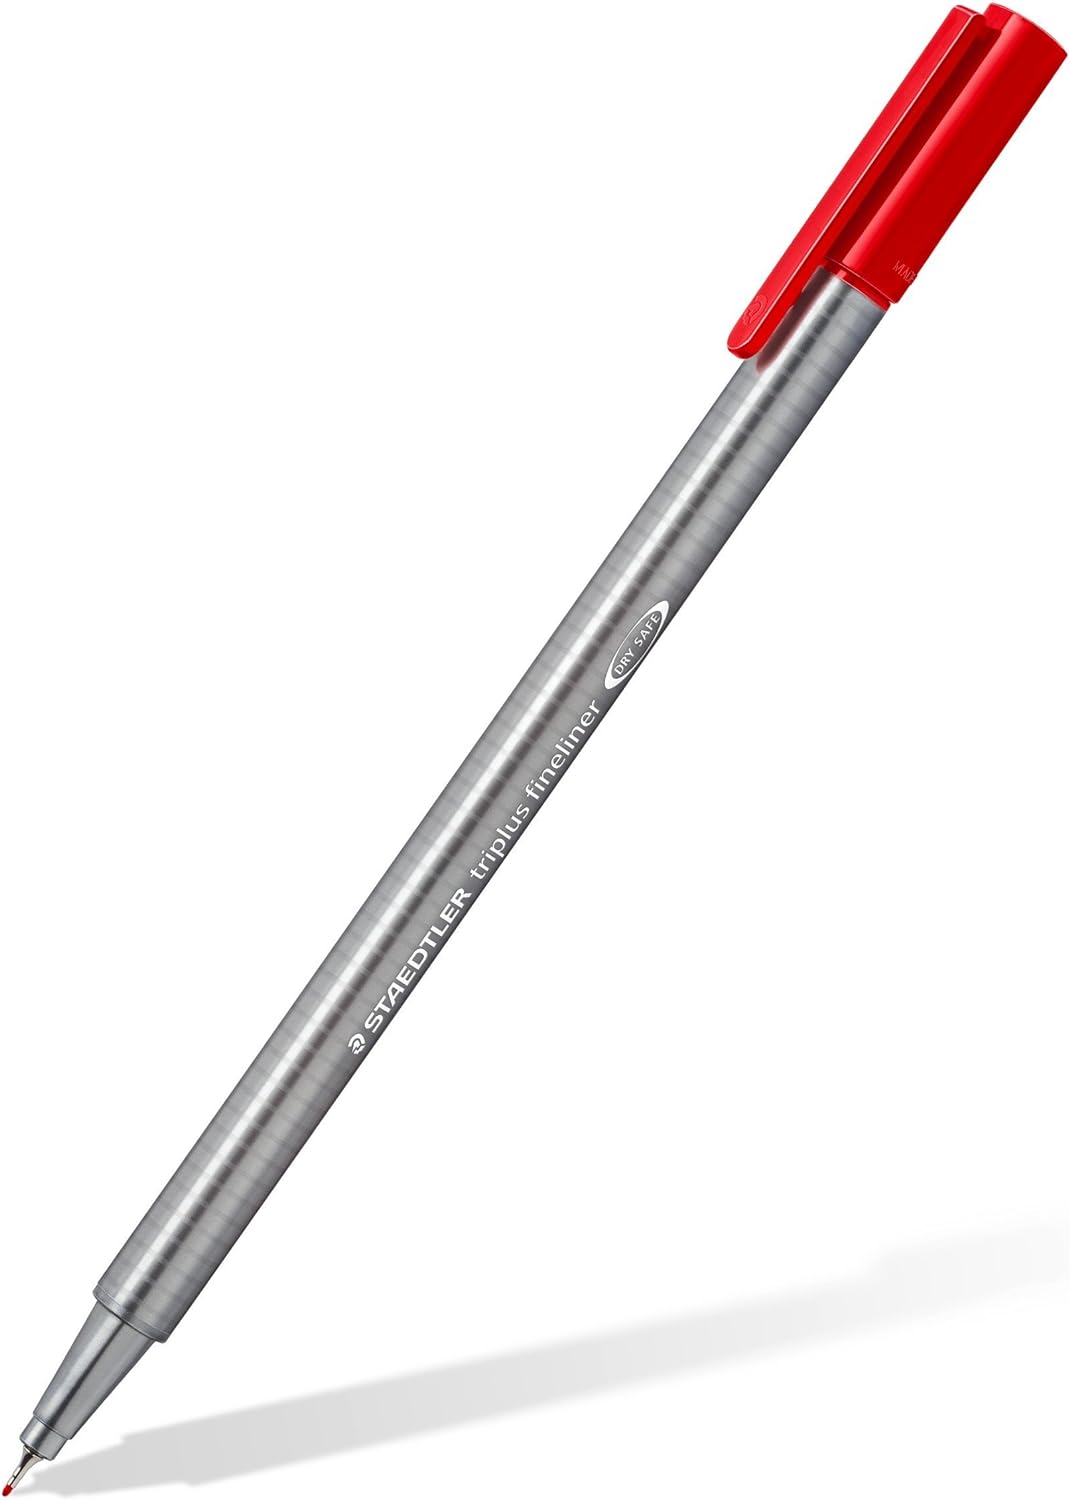 STAEDTLER Triplus Fineliner Pen,36 Assorted Colours